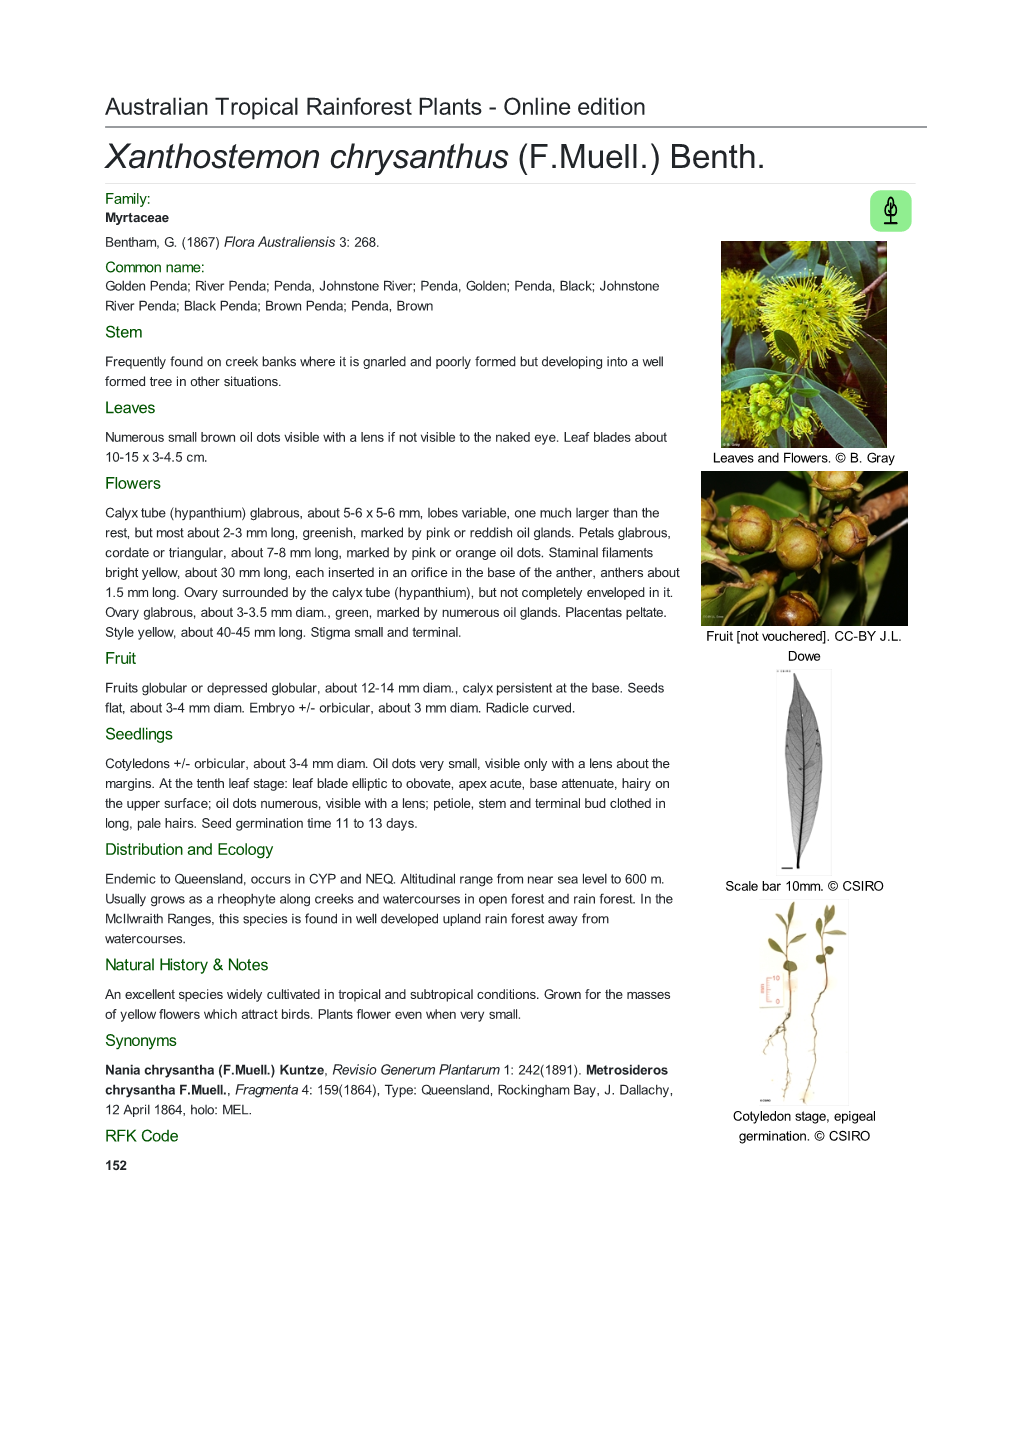 Xanthostemon Chrysanthus (F.Muell.) Benth